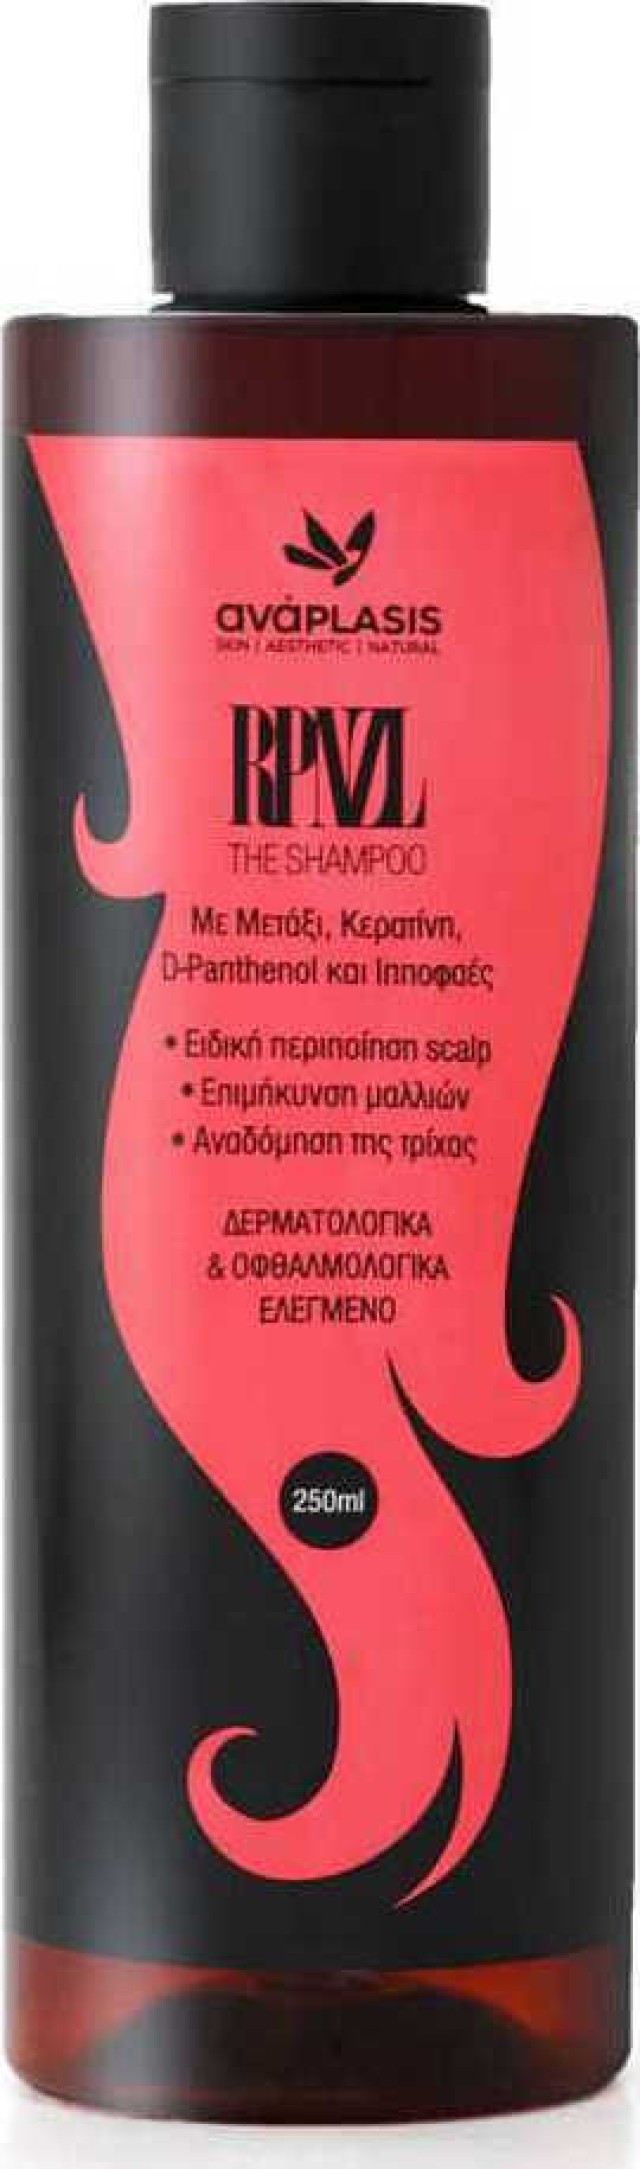 AnaPlasis RPNZL The Shampoo Σαμπουάν για Ενδυνάμωση Επιμήκυνση - της Τρίχας 250ml